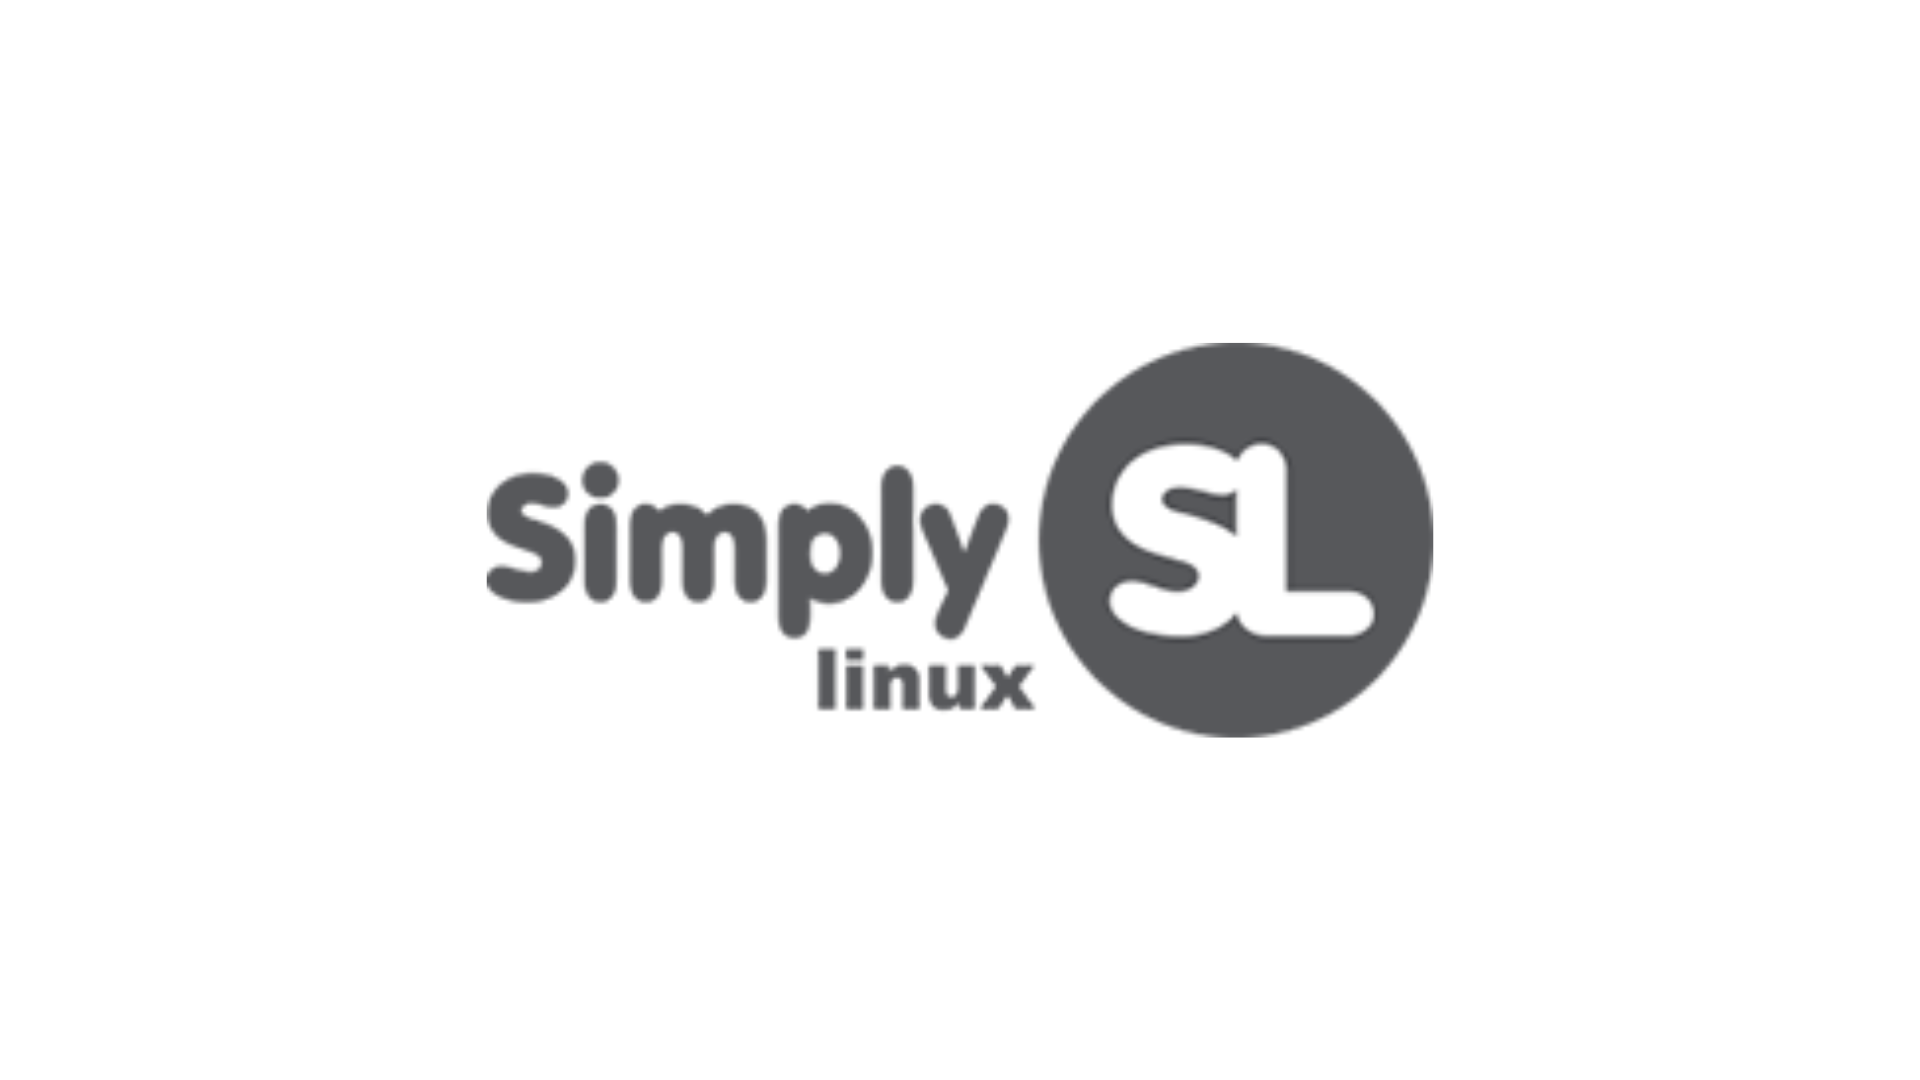 Simply com. Симпли линукс. ОС simply Linux. Simply Linux логотип. Basalt simply Linux.